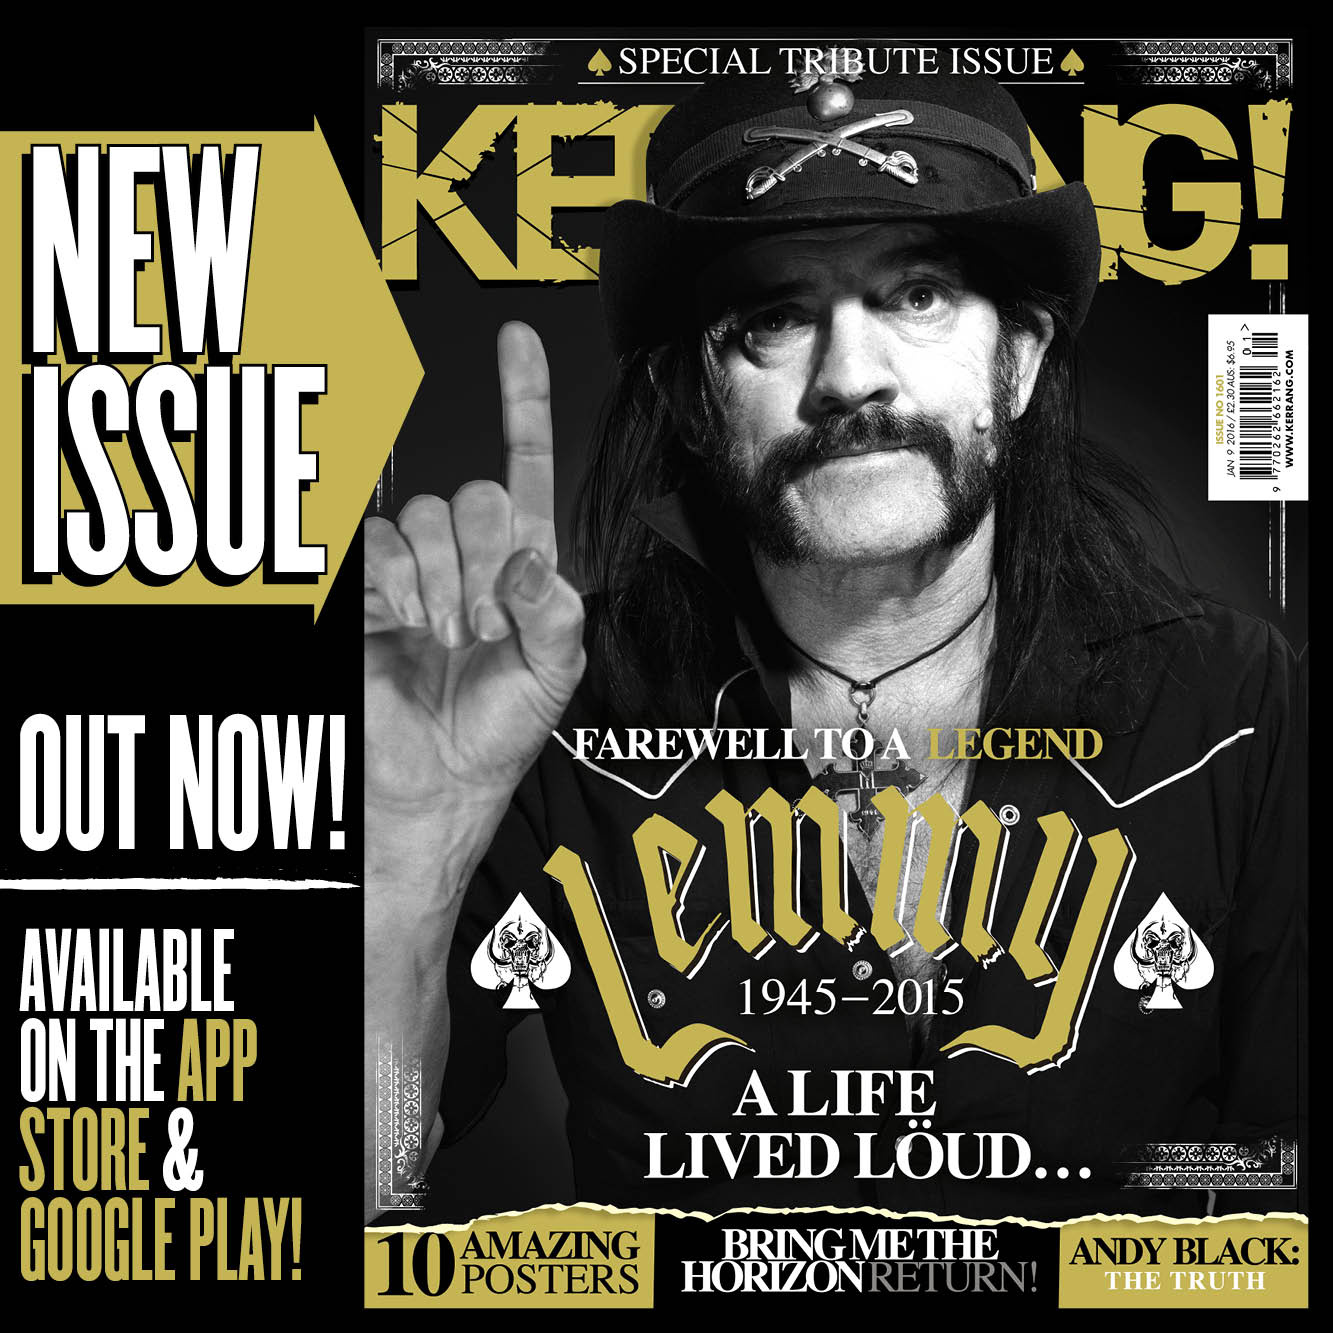 Kerrang! Magazine